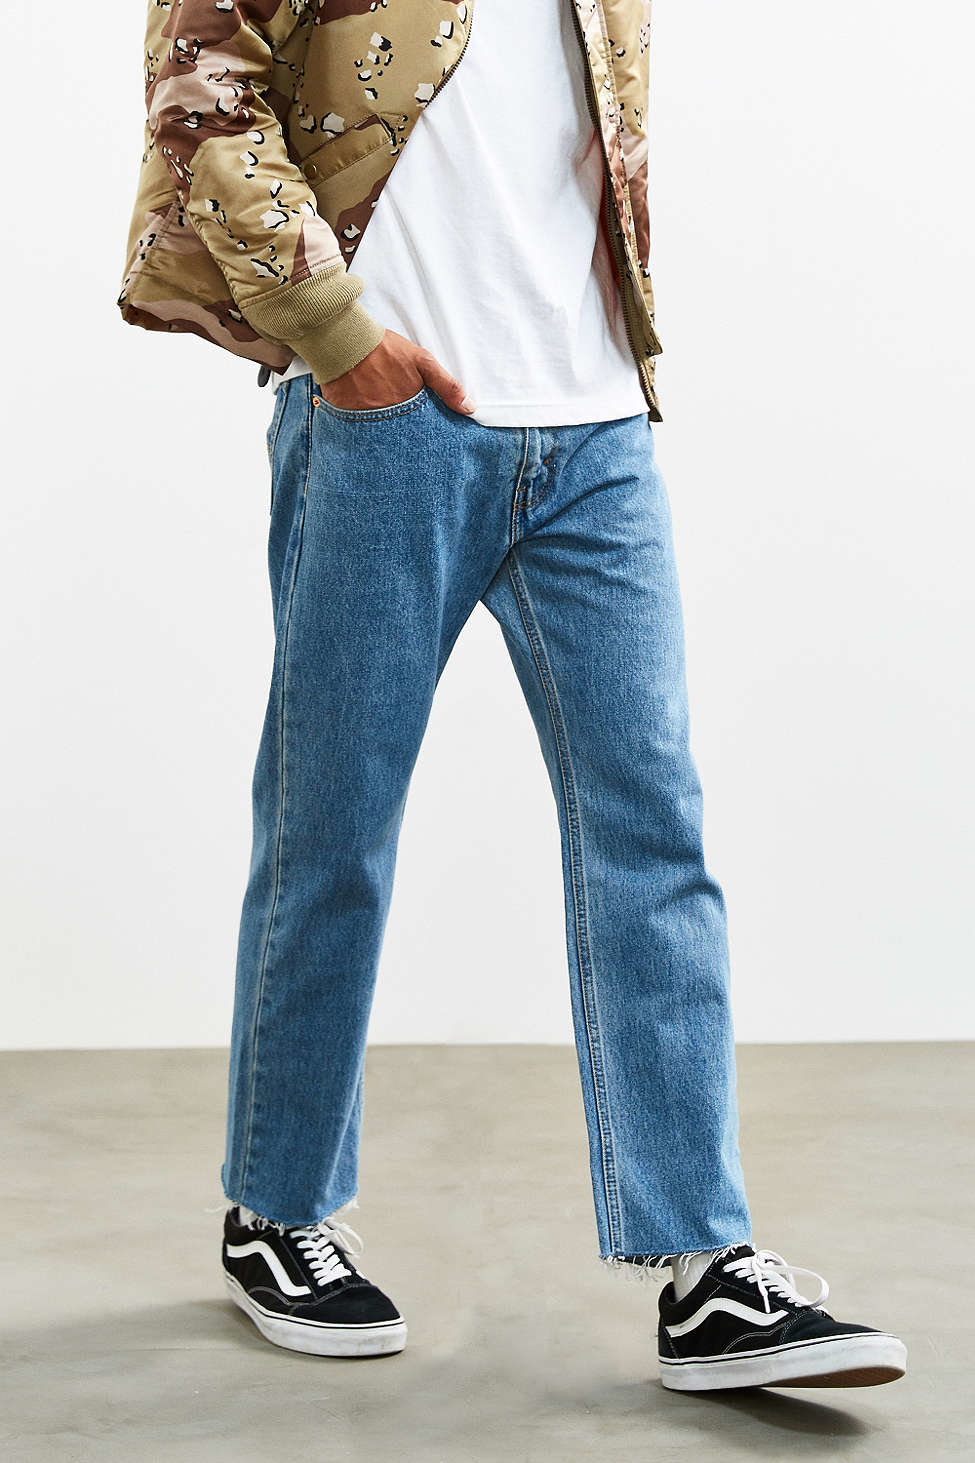 Lyst - Urban Outfitters Cutoff Hem Levi's Light Stonewash 505 Slim Jean ...